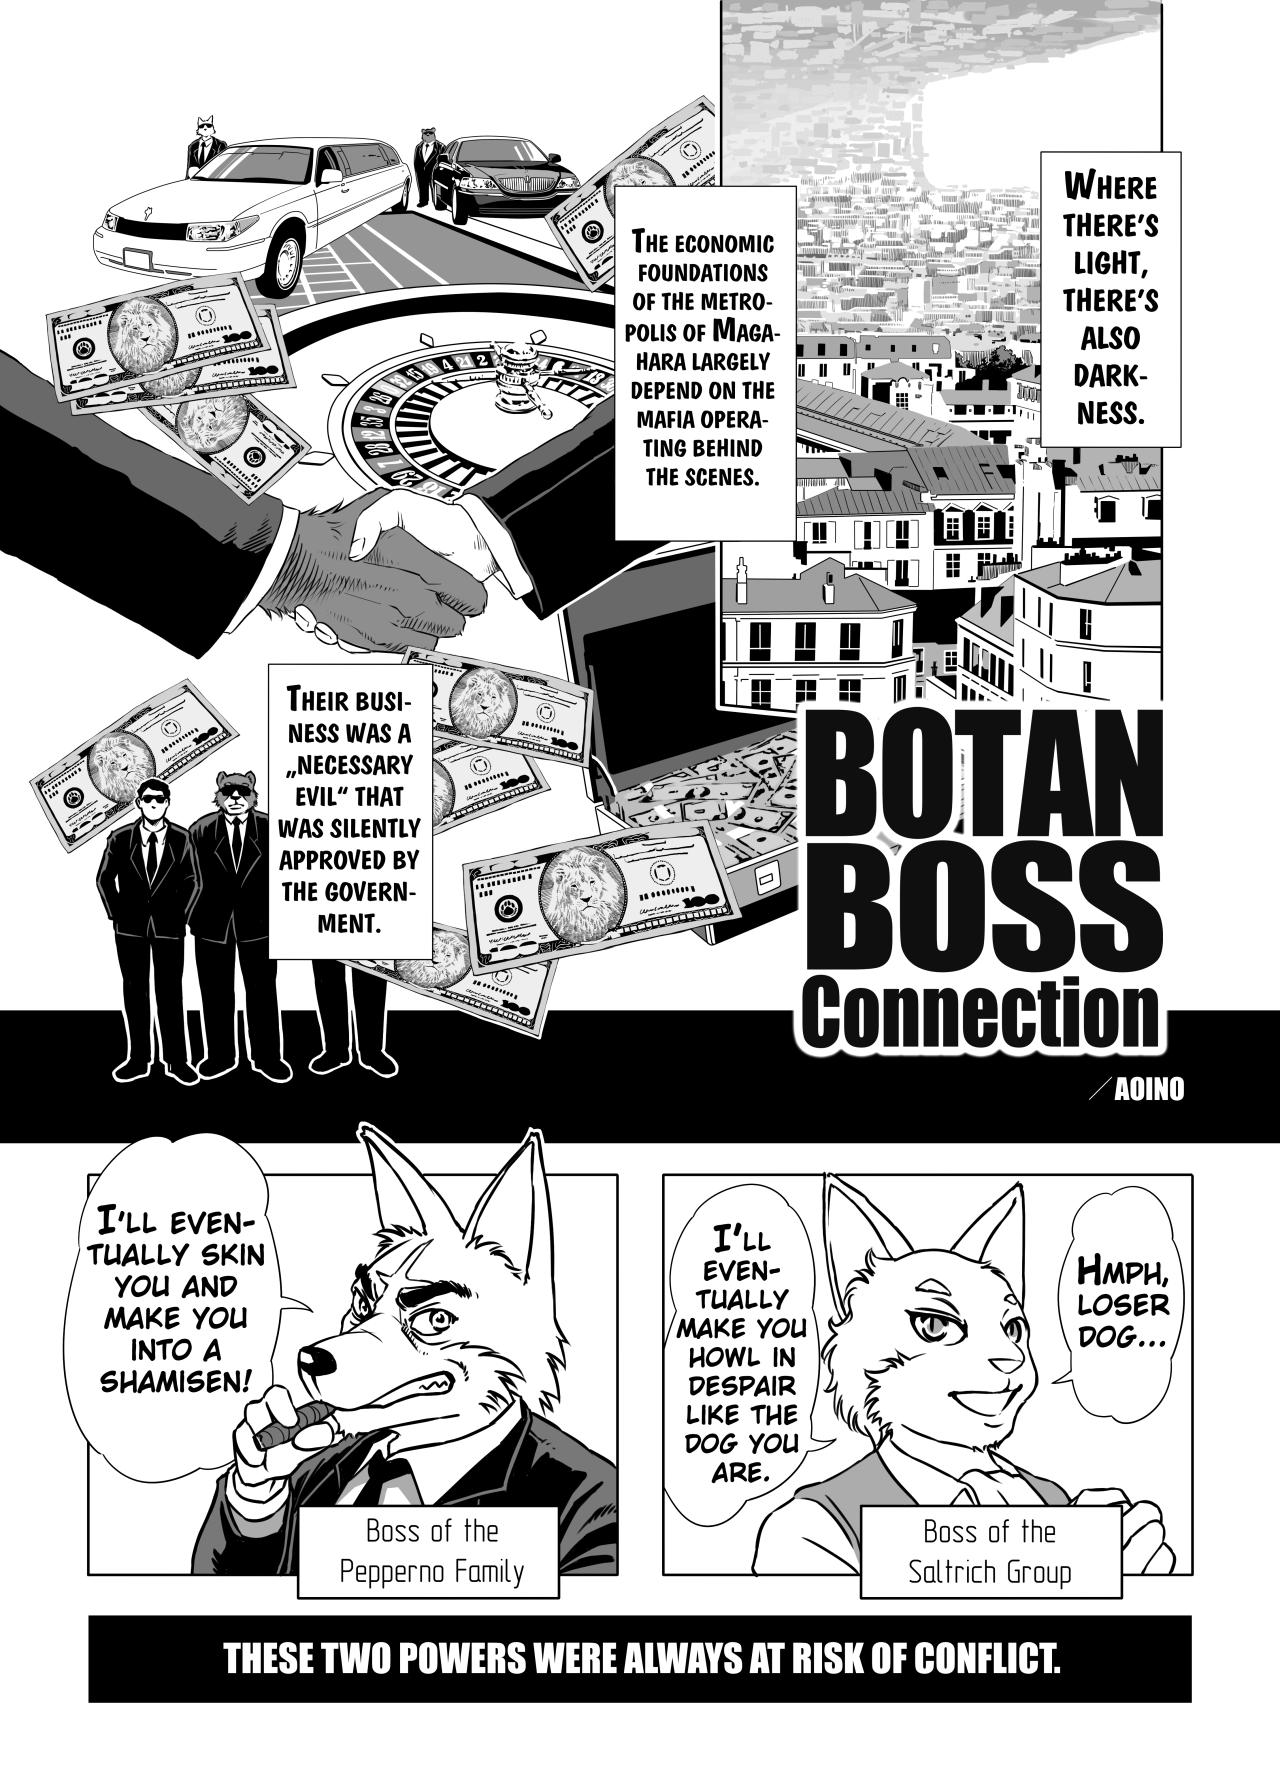 Botan Boss Connection 0